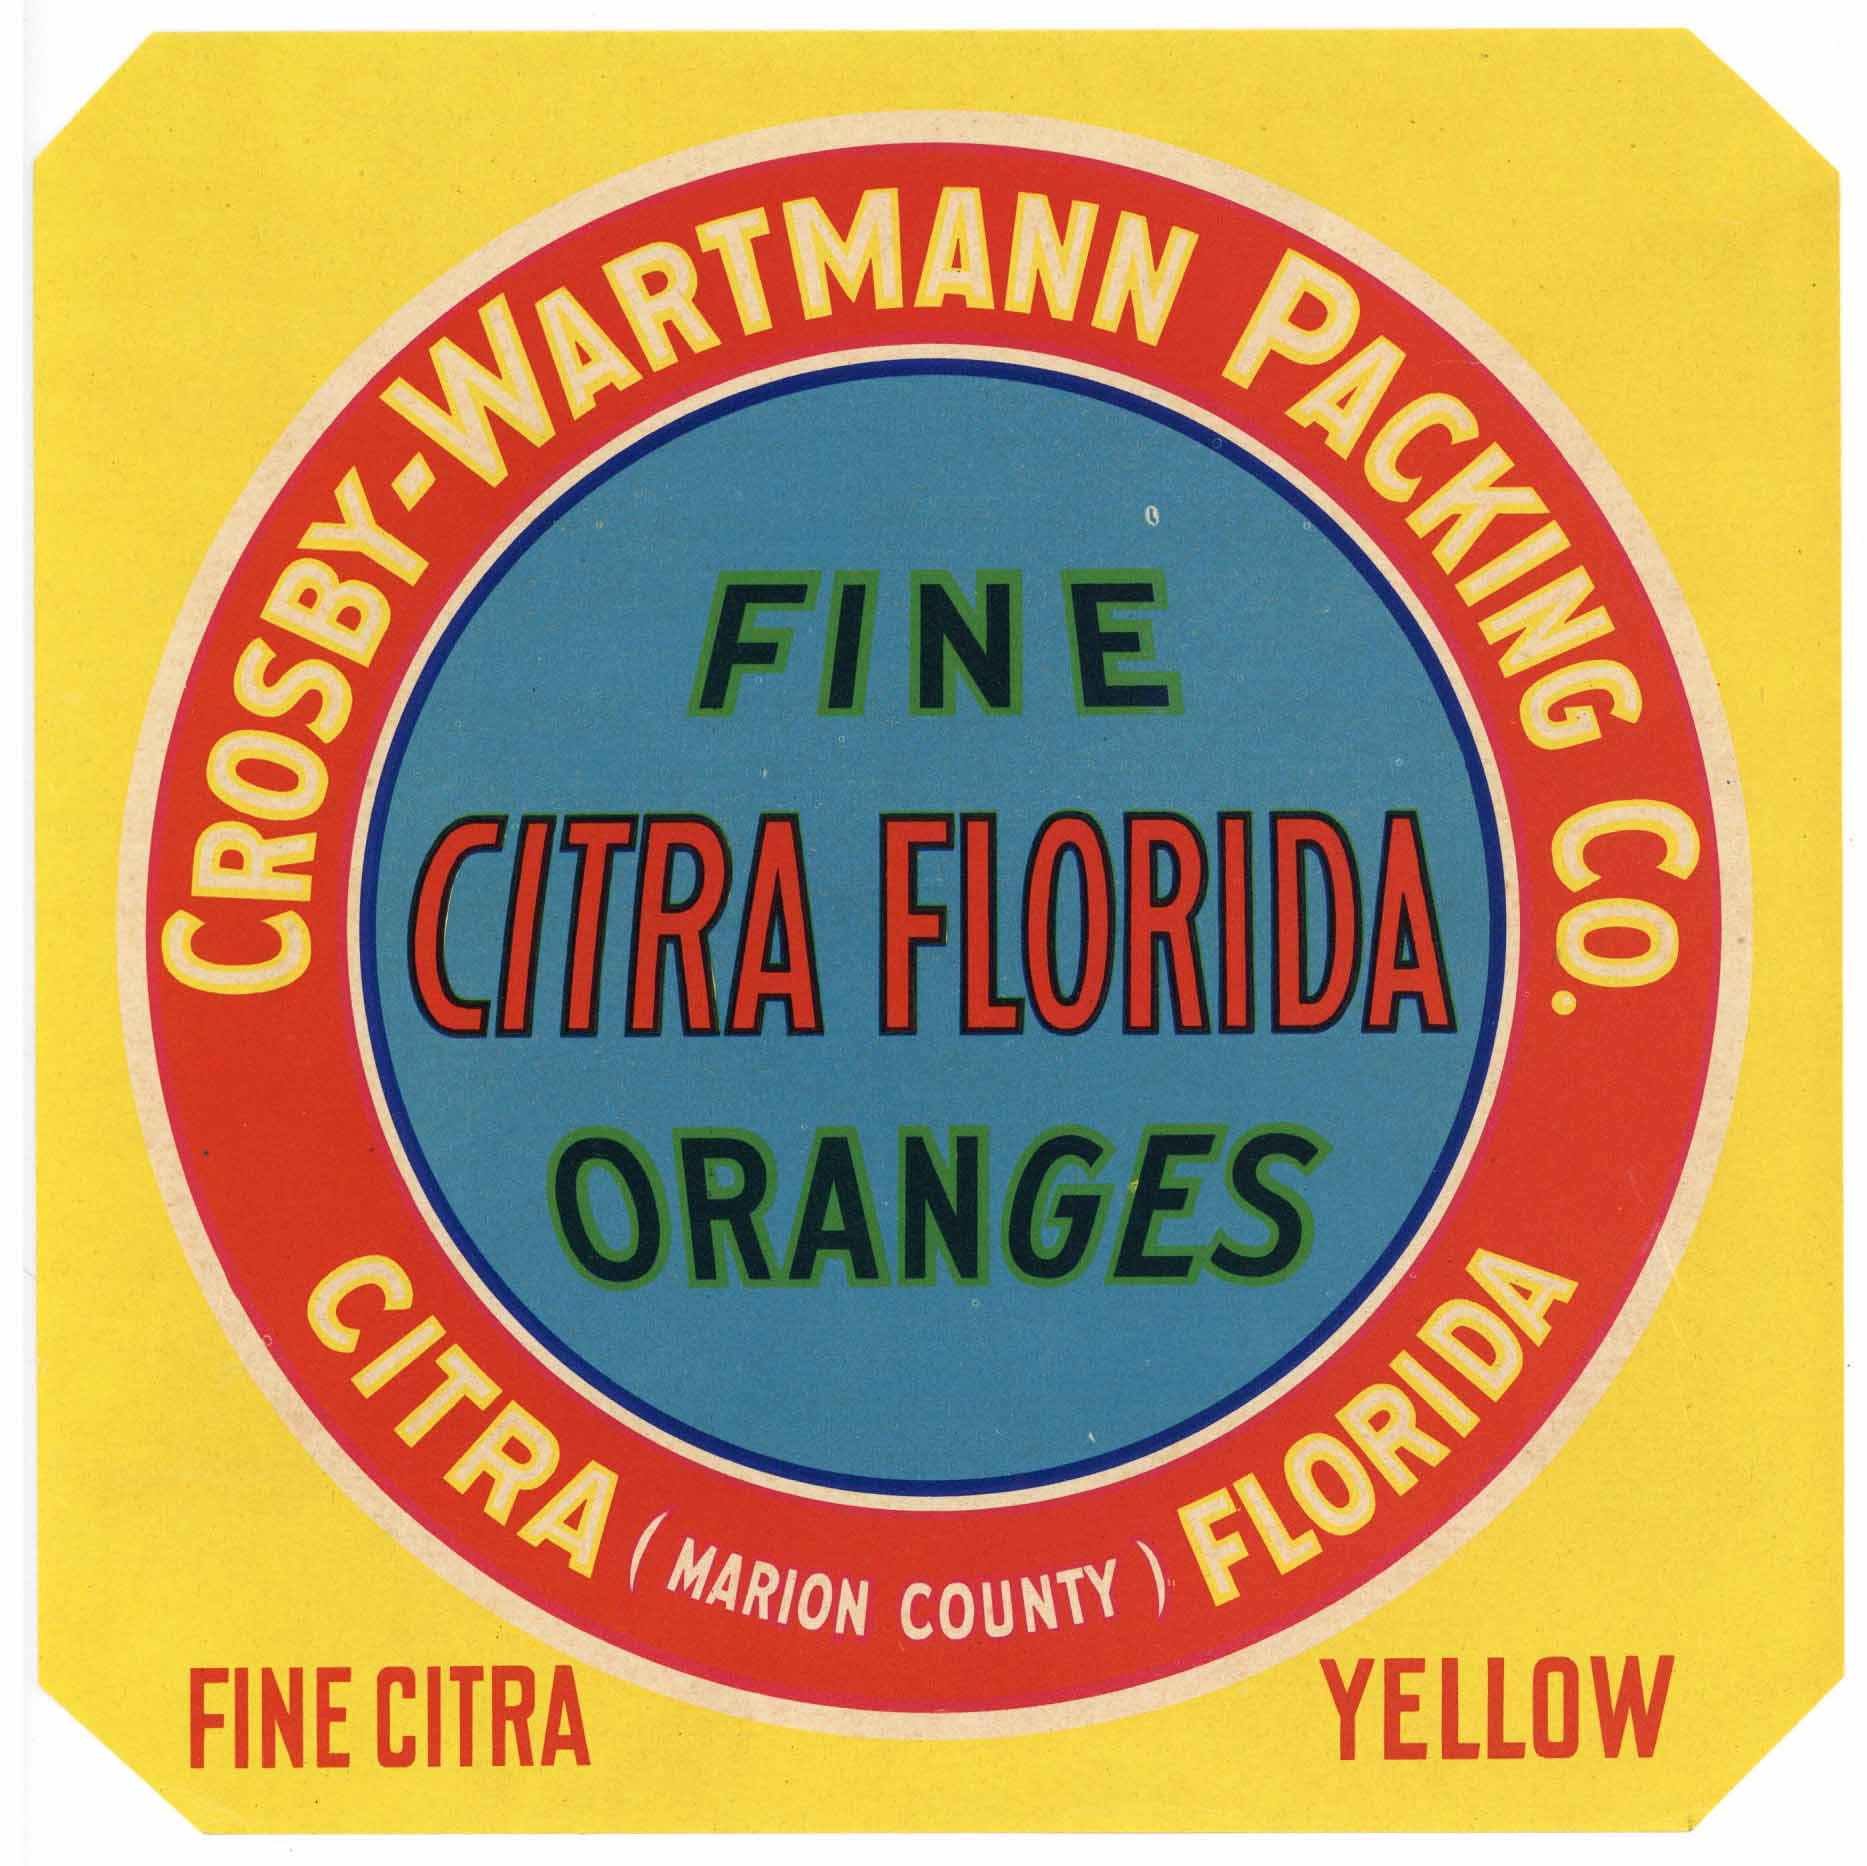 Citra Florida Brand Vintage Florida Citrus Crate Label, yellow